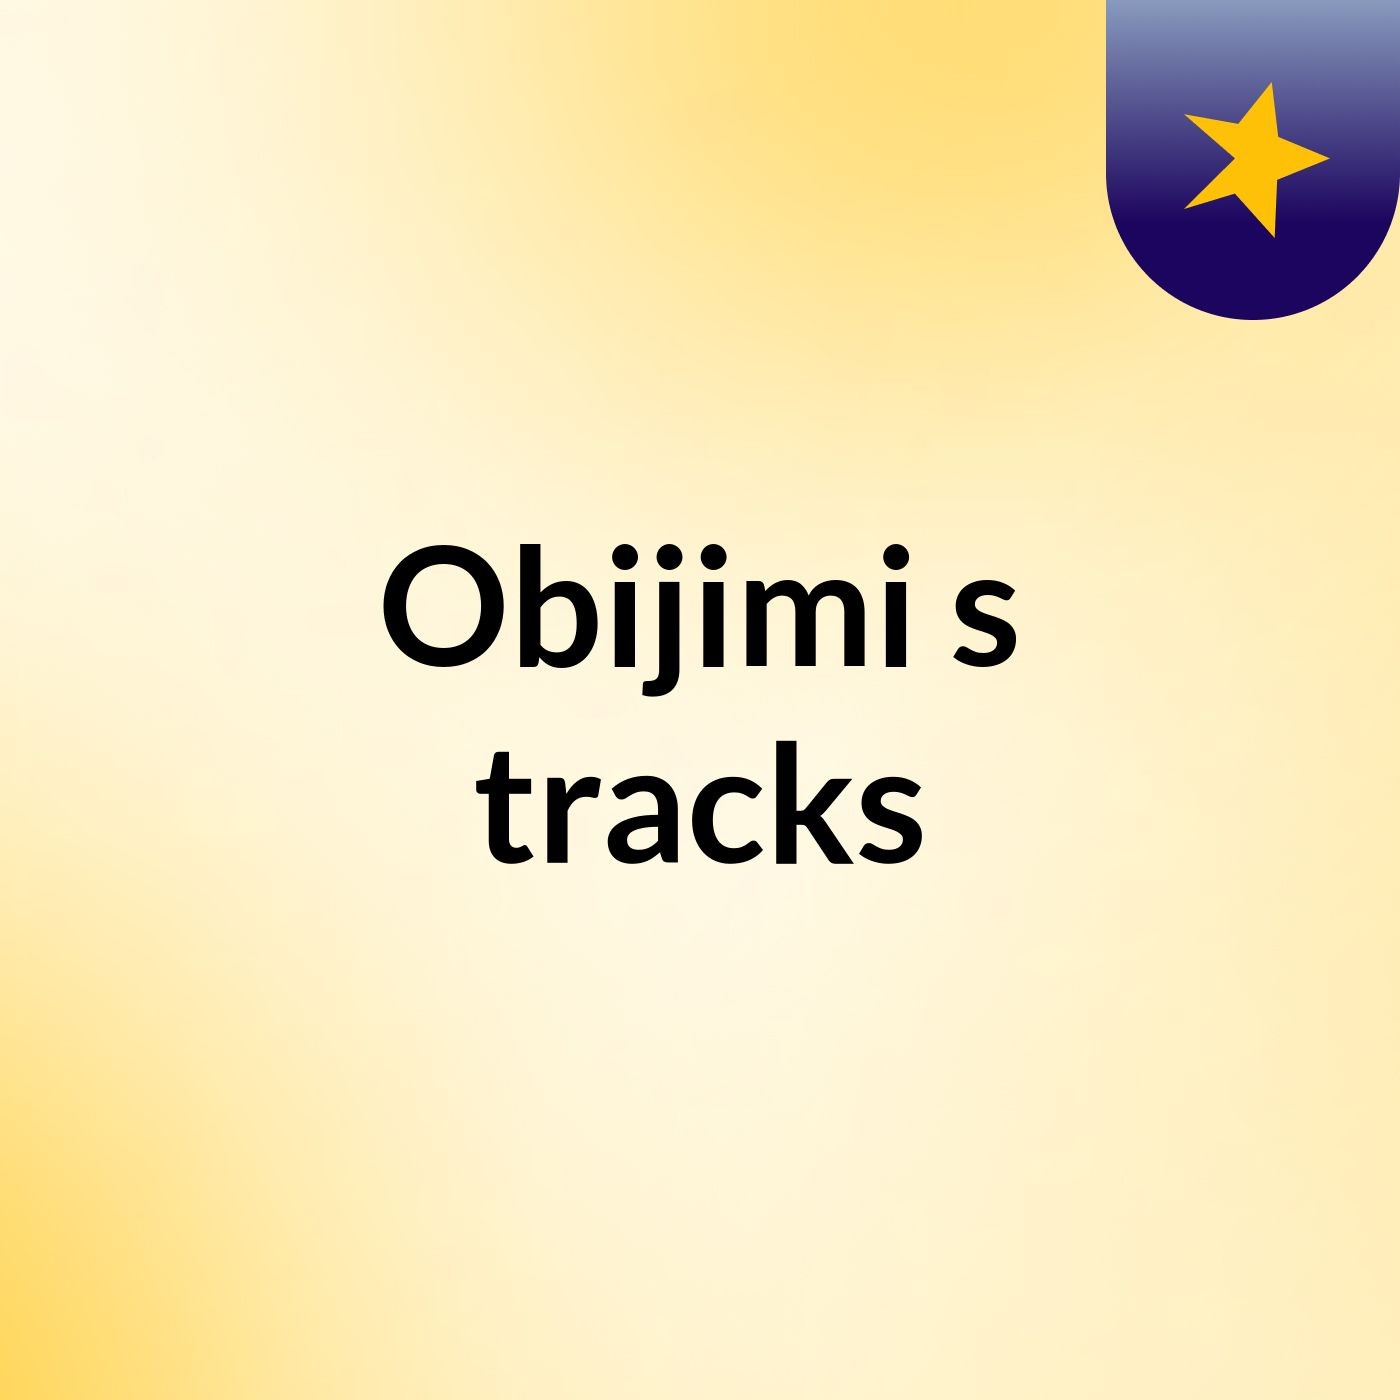 Obijimi's tracks